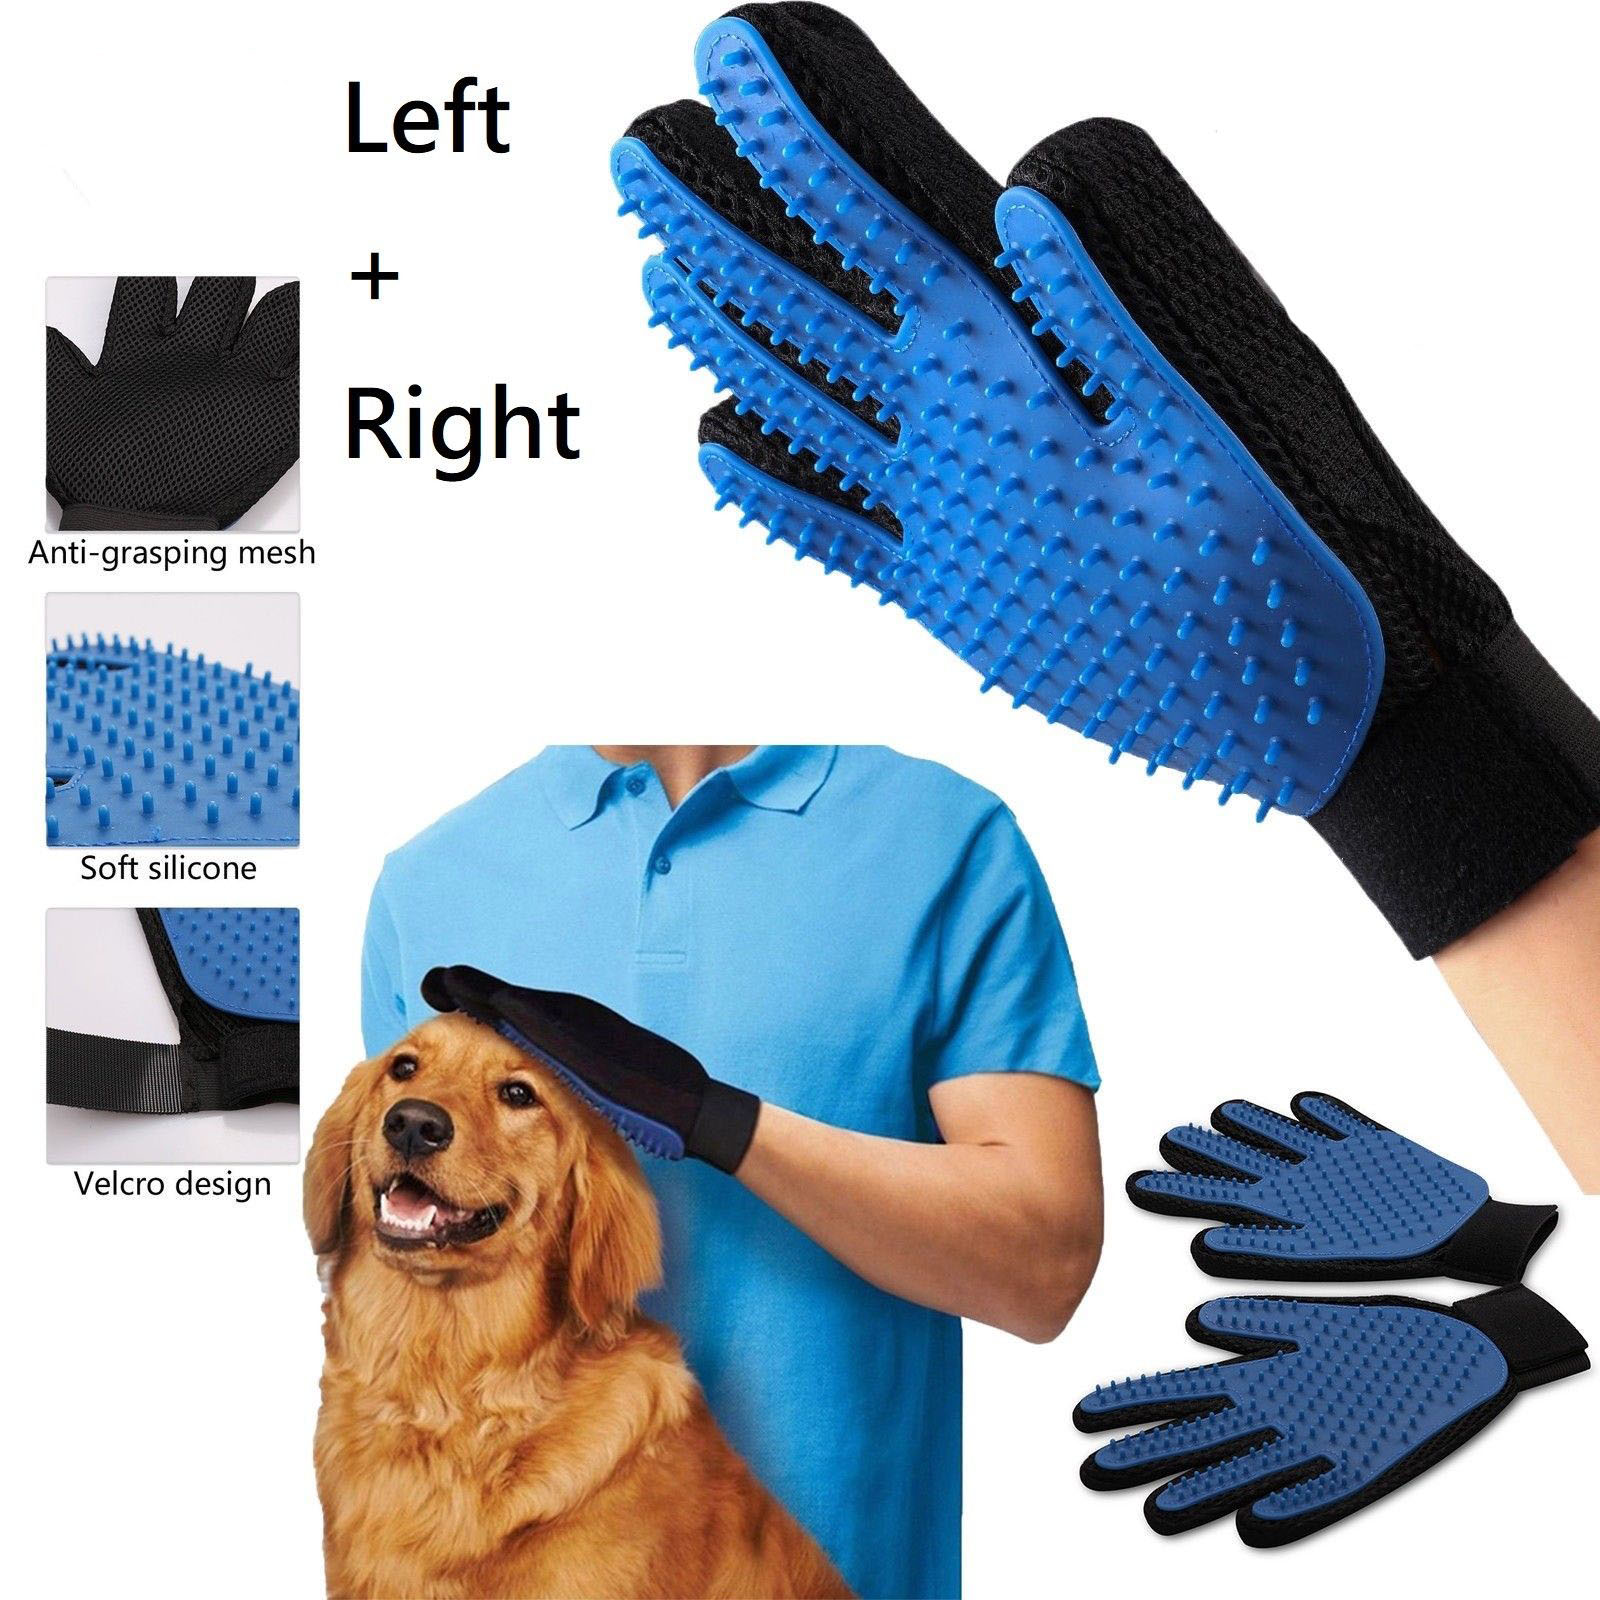 Pet's /Dog Bath Gloves: Buy sell online 